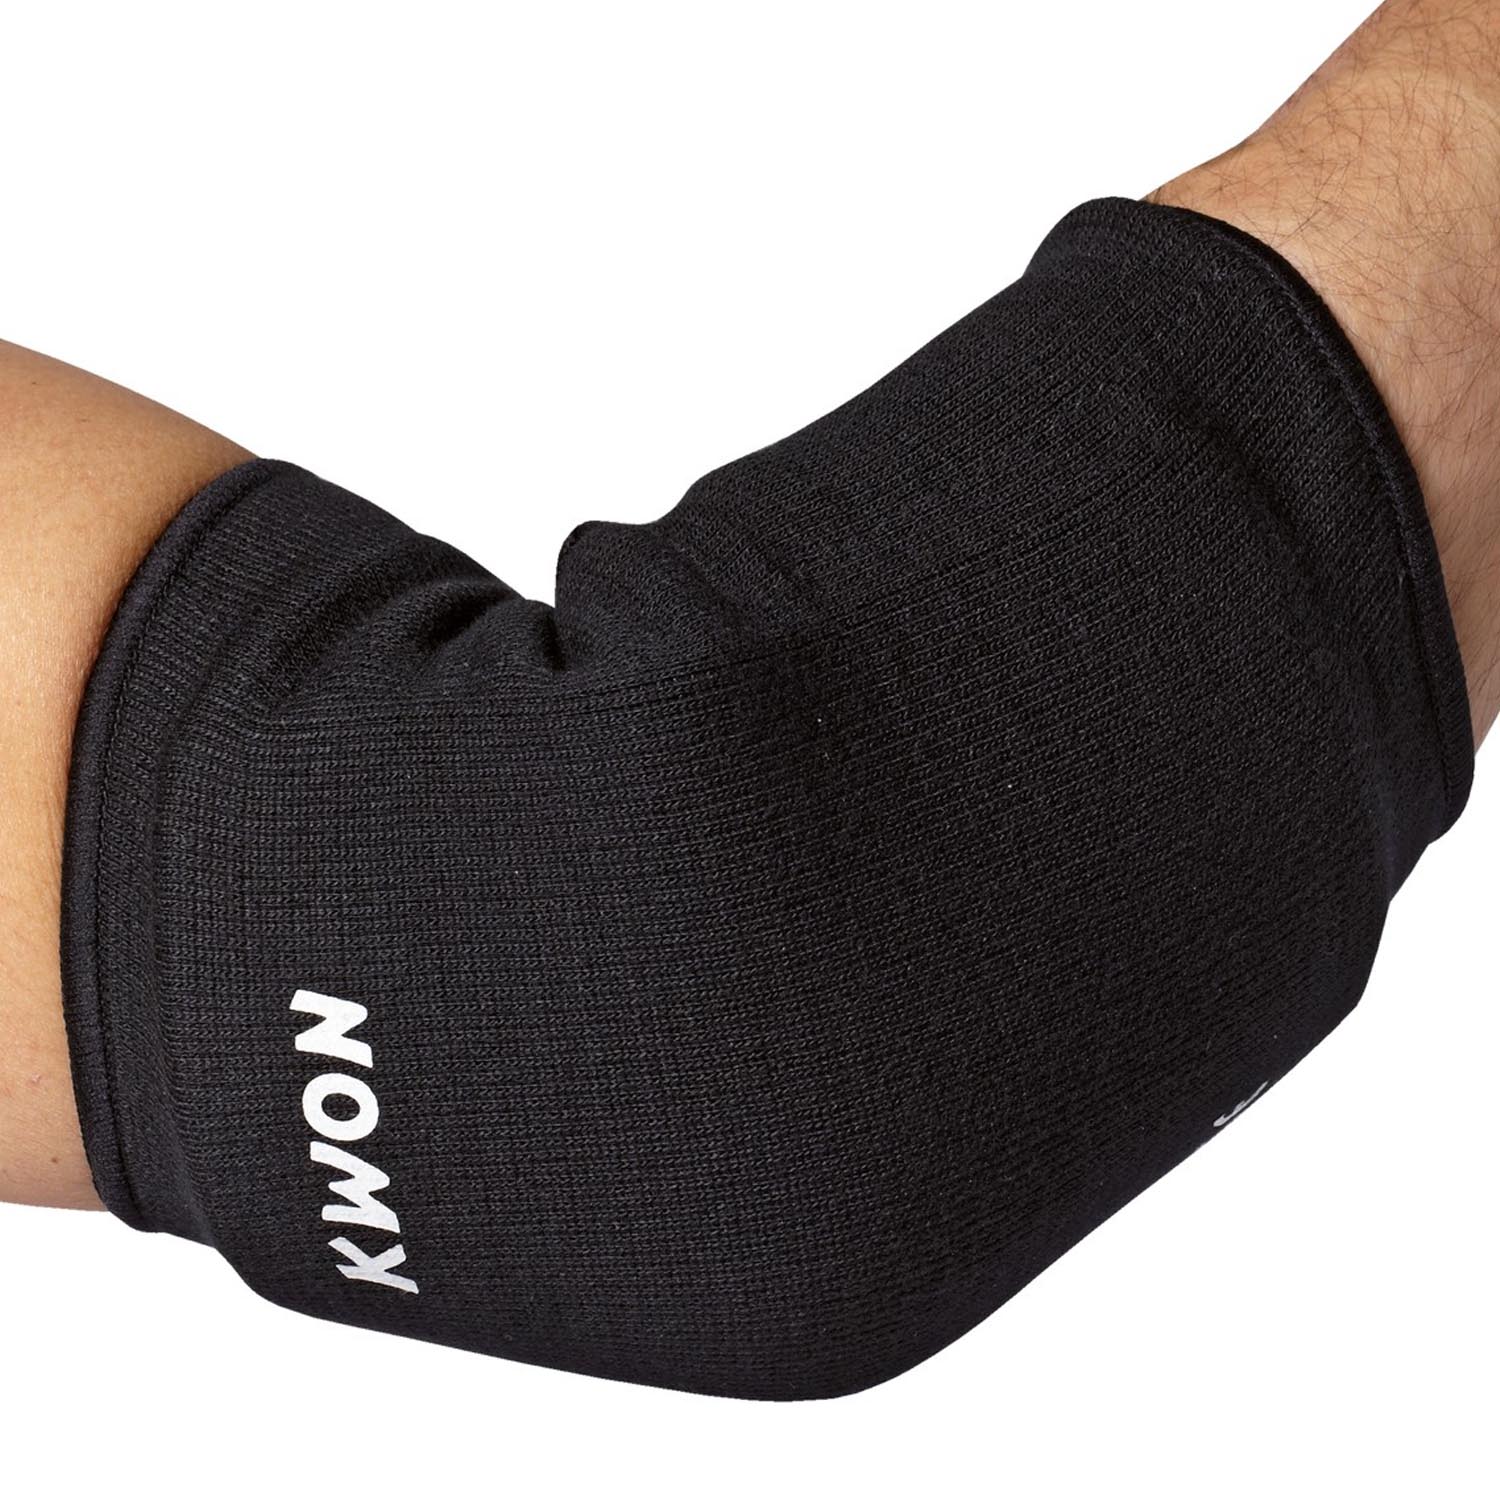 KWON Elbowprotection, black